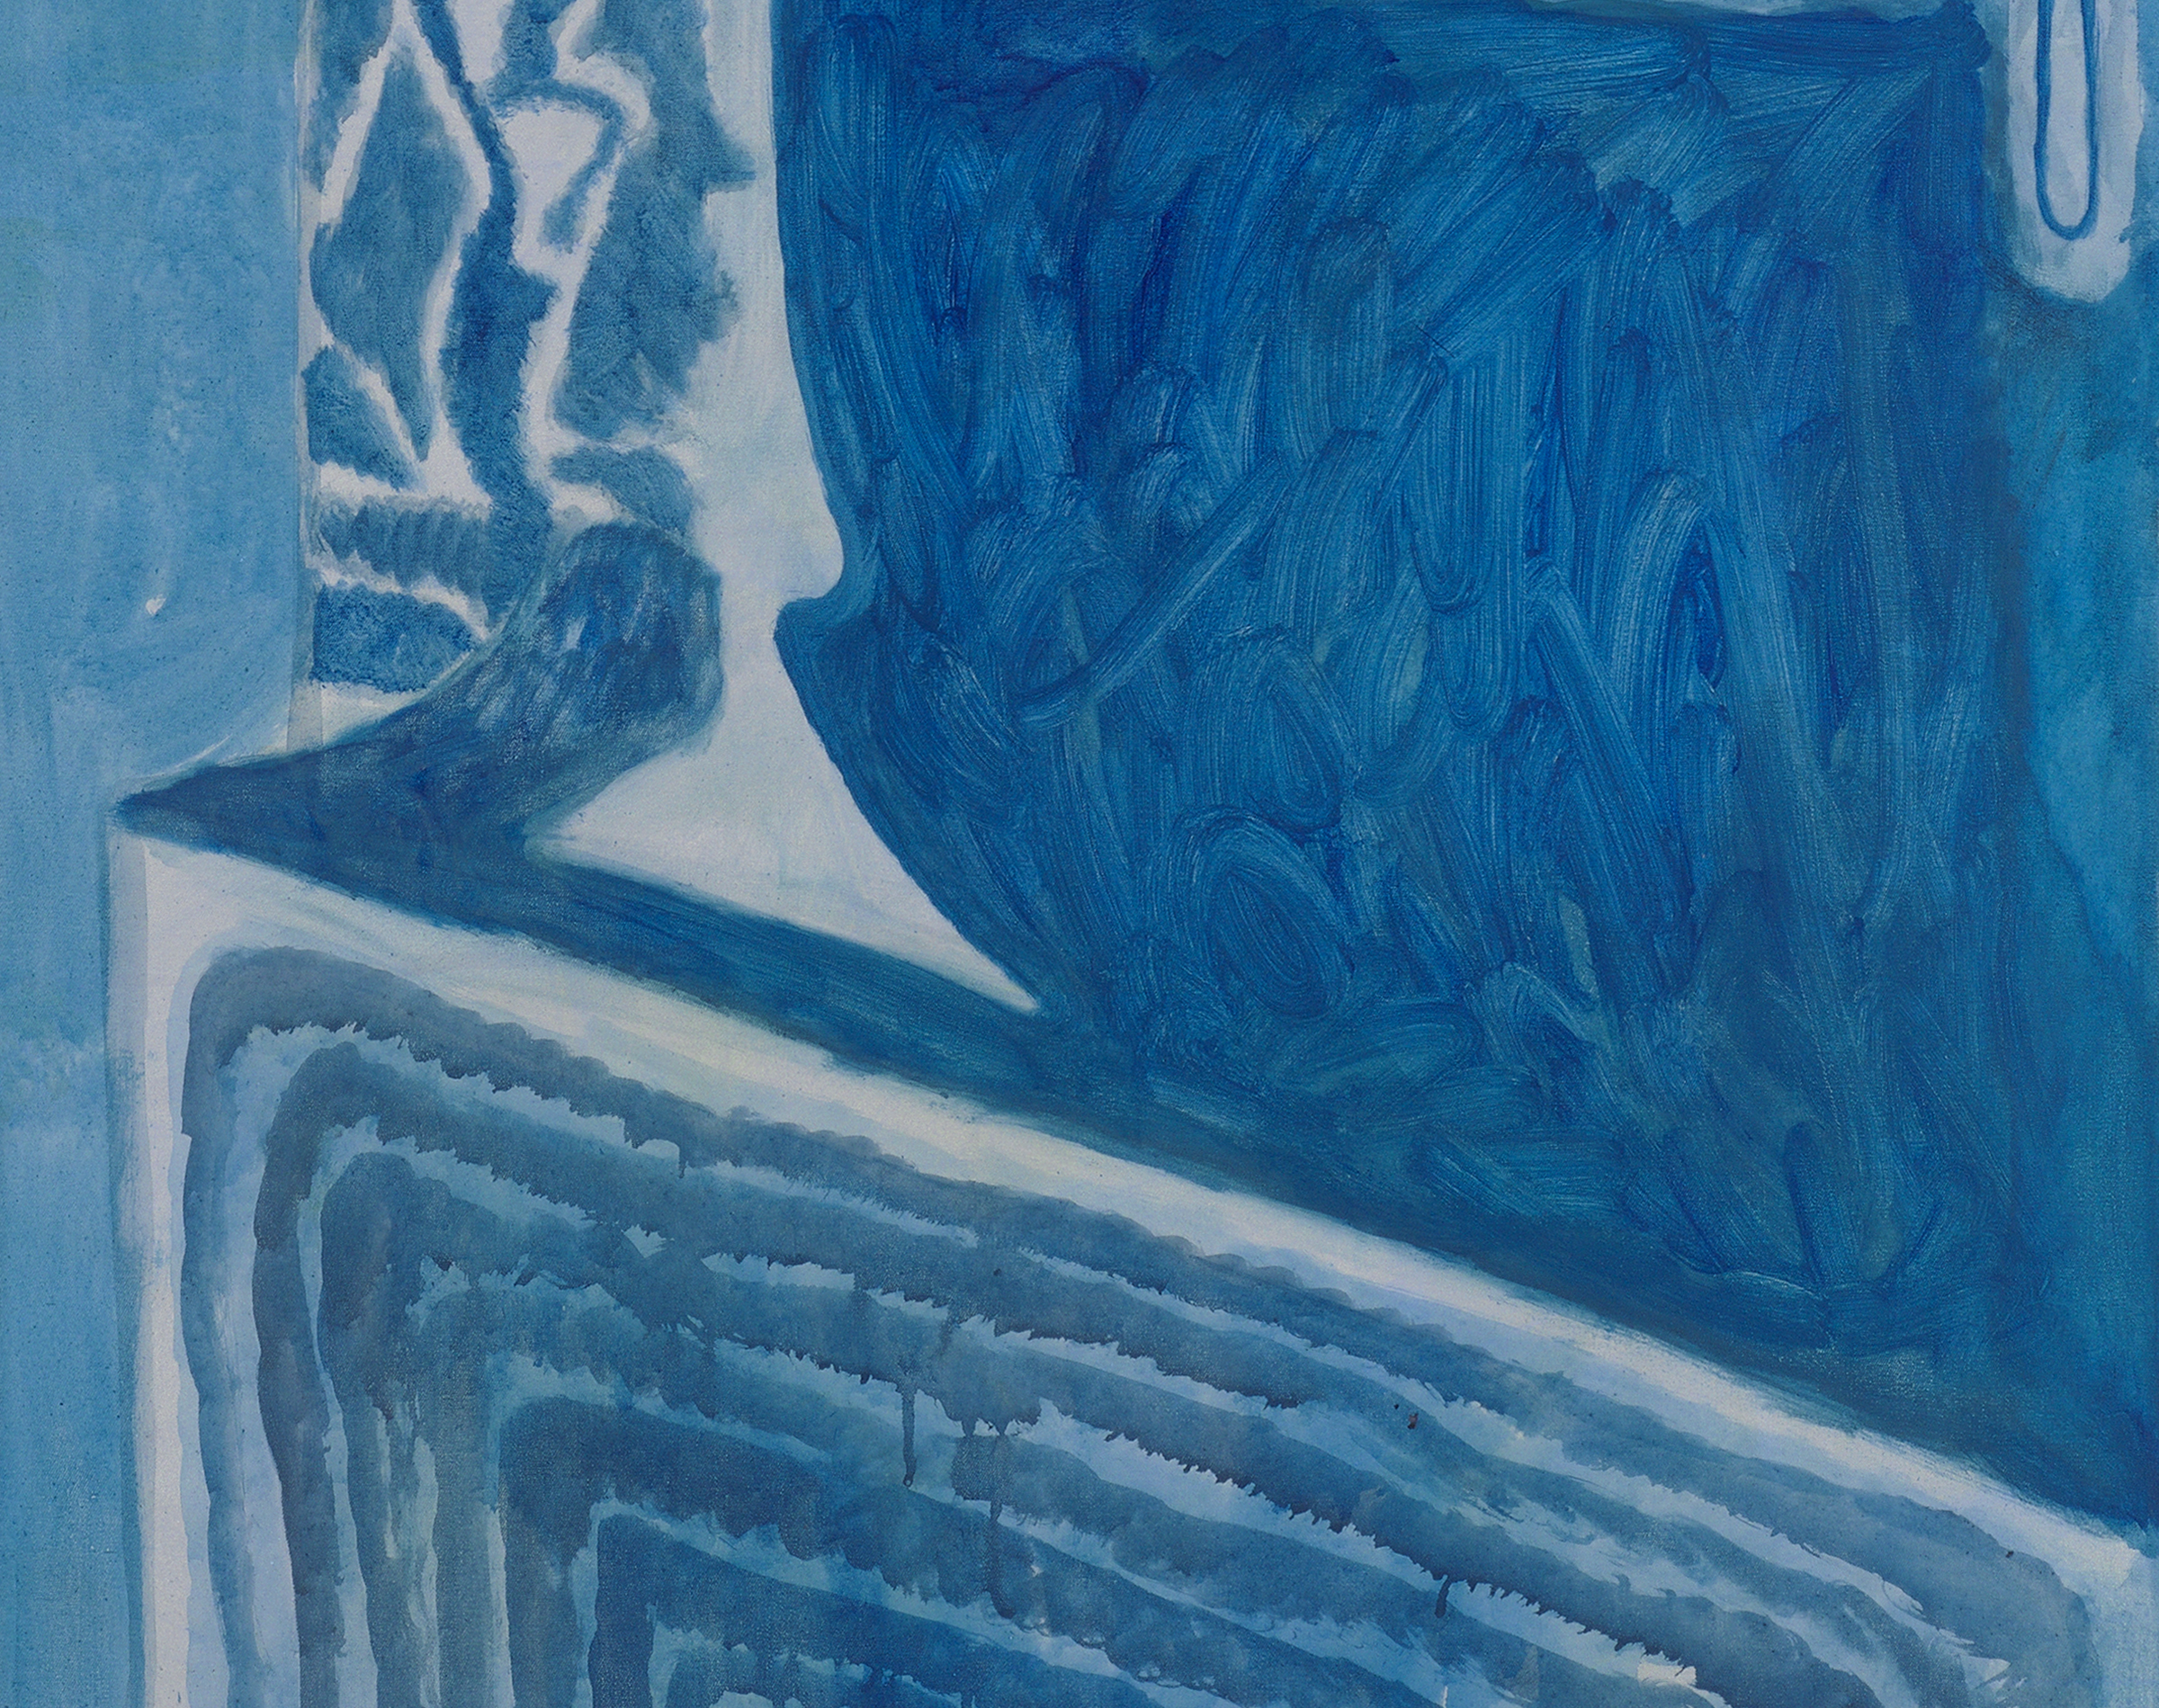   CHRISTOPH ROßNER  (detail) &nbsp;Piano Nights , 2015, acrylic on canvas, 78.75" x 61" 